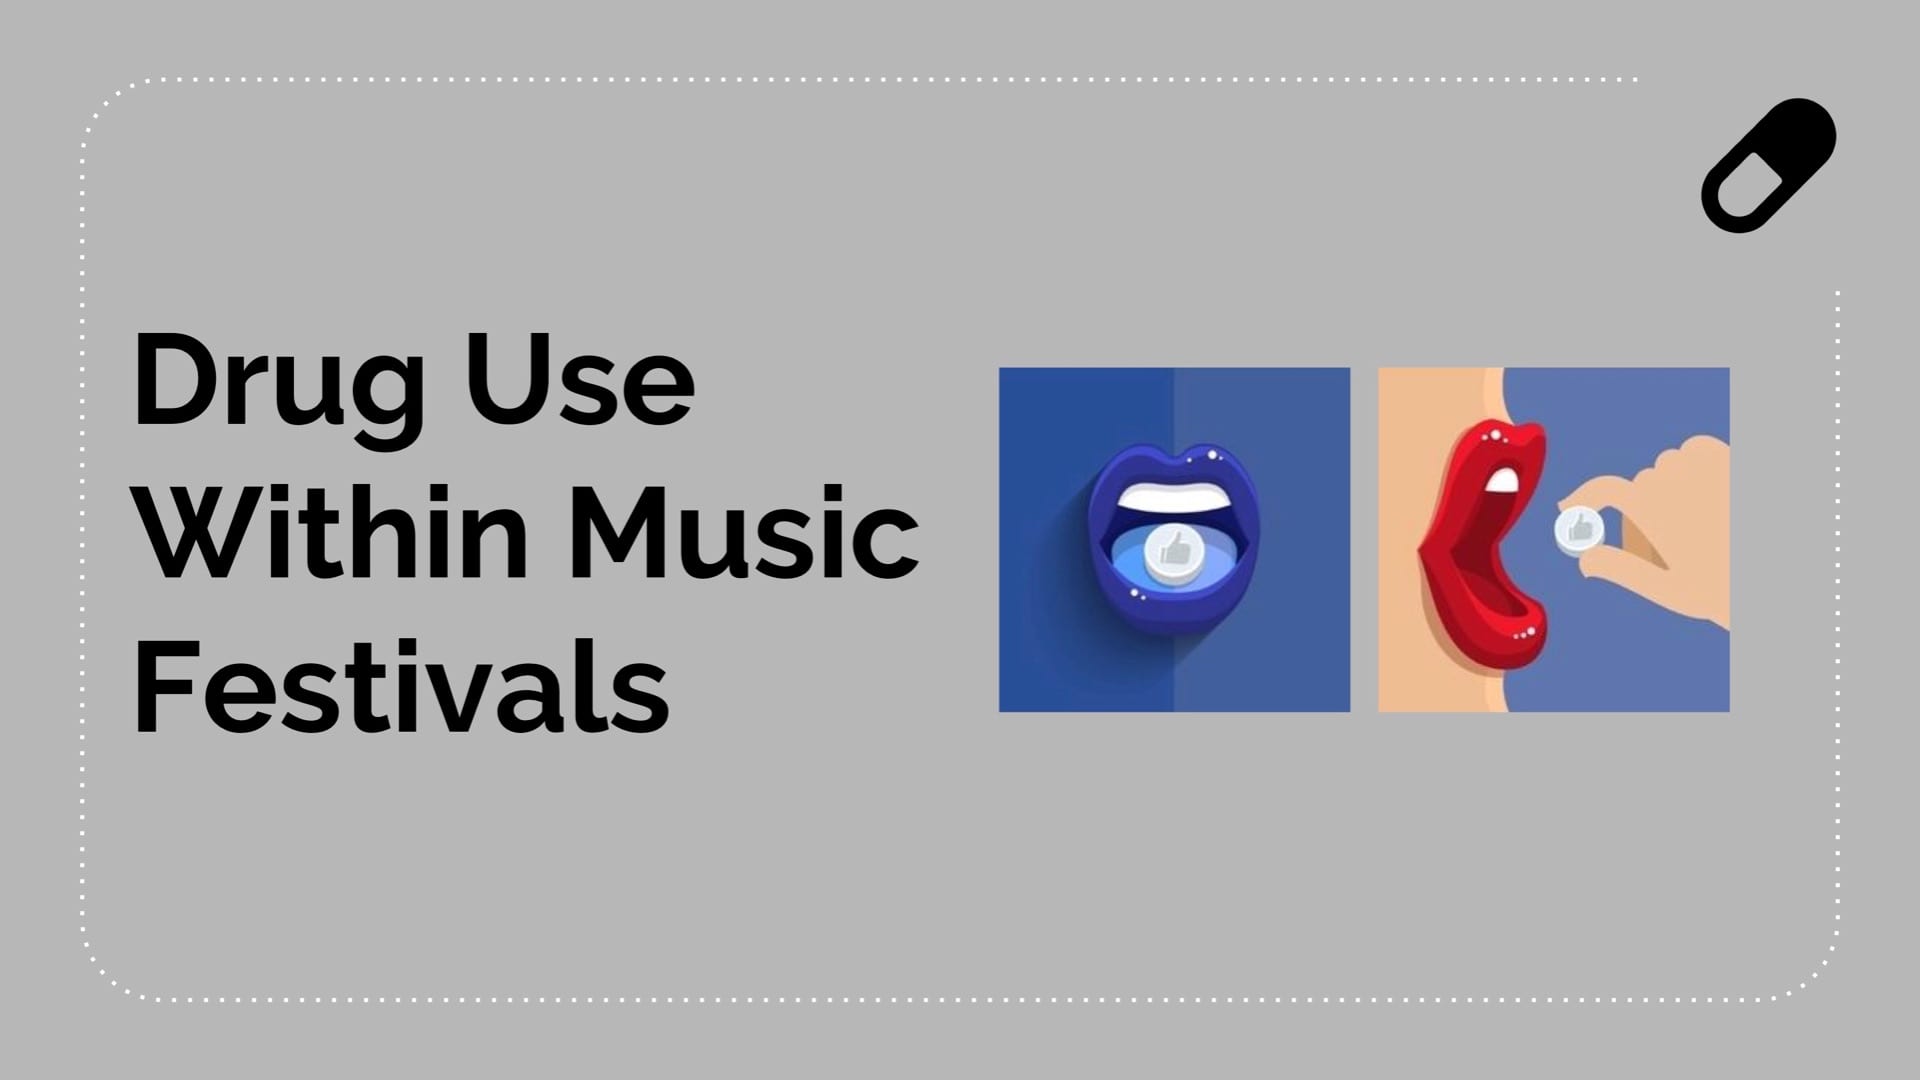 Designing Strategies to Address Drug Use Within Music Festivals